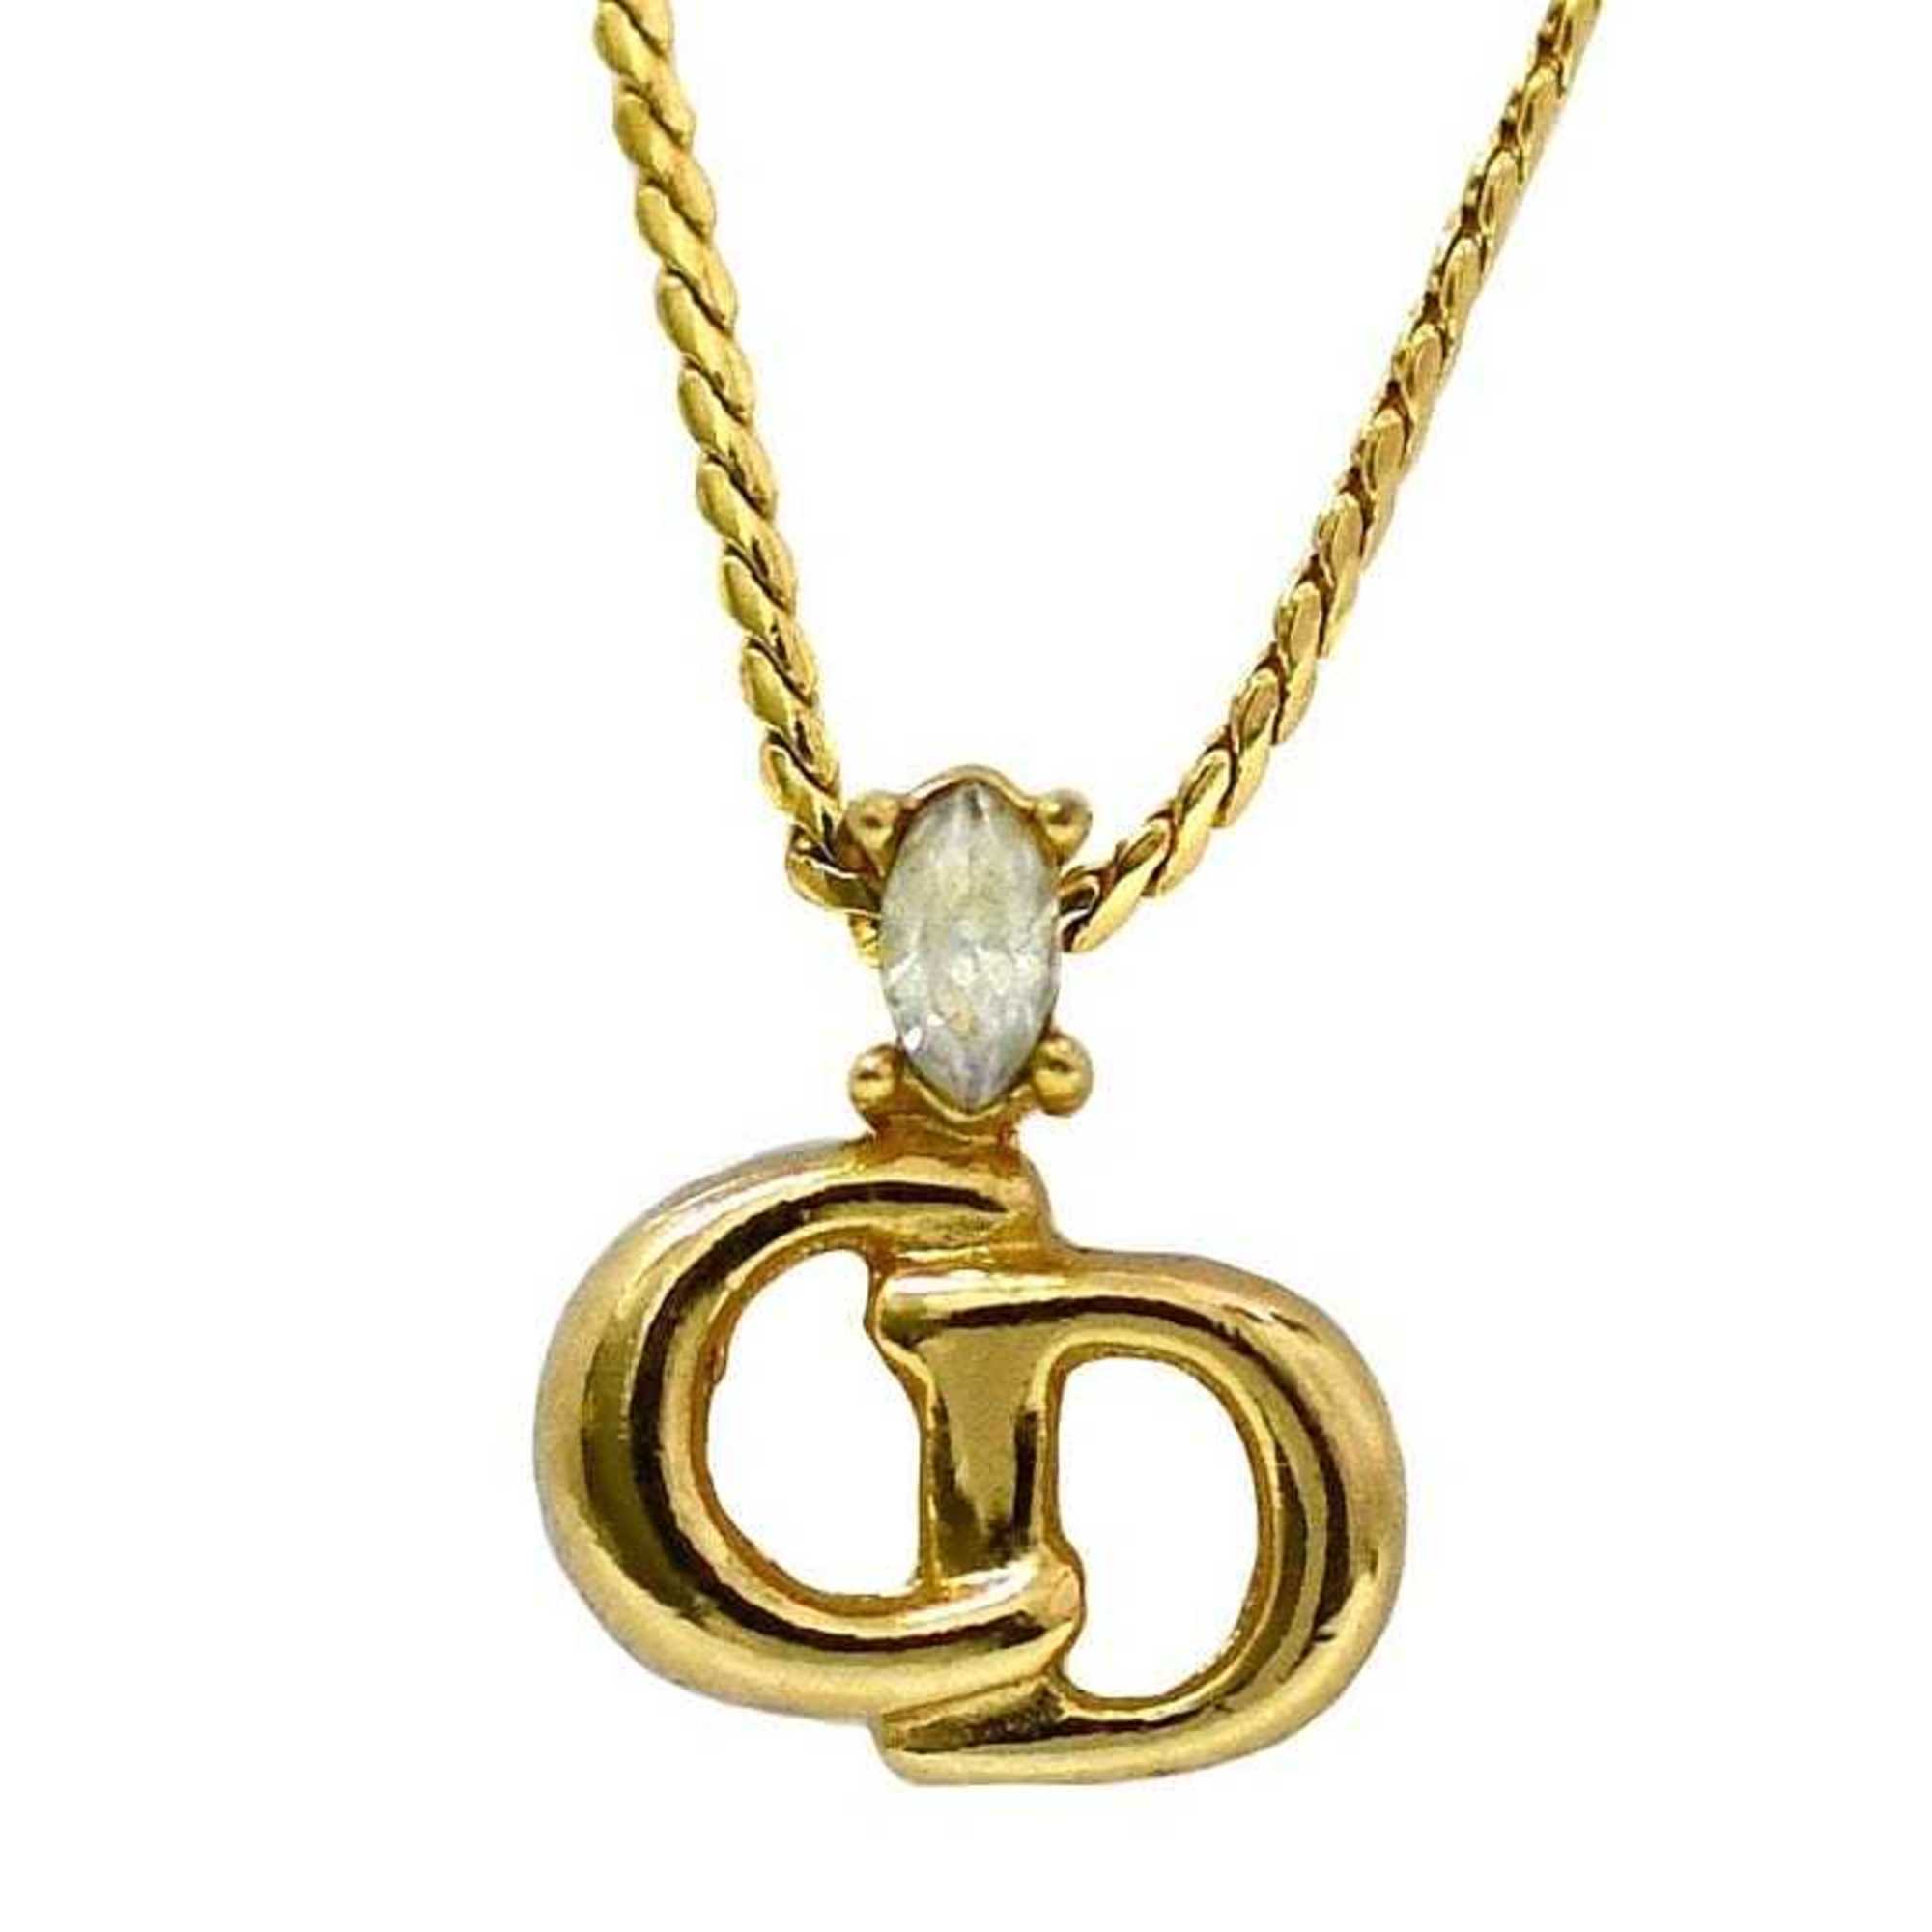 Christian Dior Necklace Gold ec-20359 CD GP Stone Women's